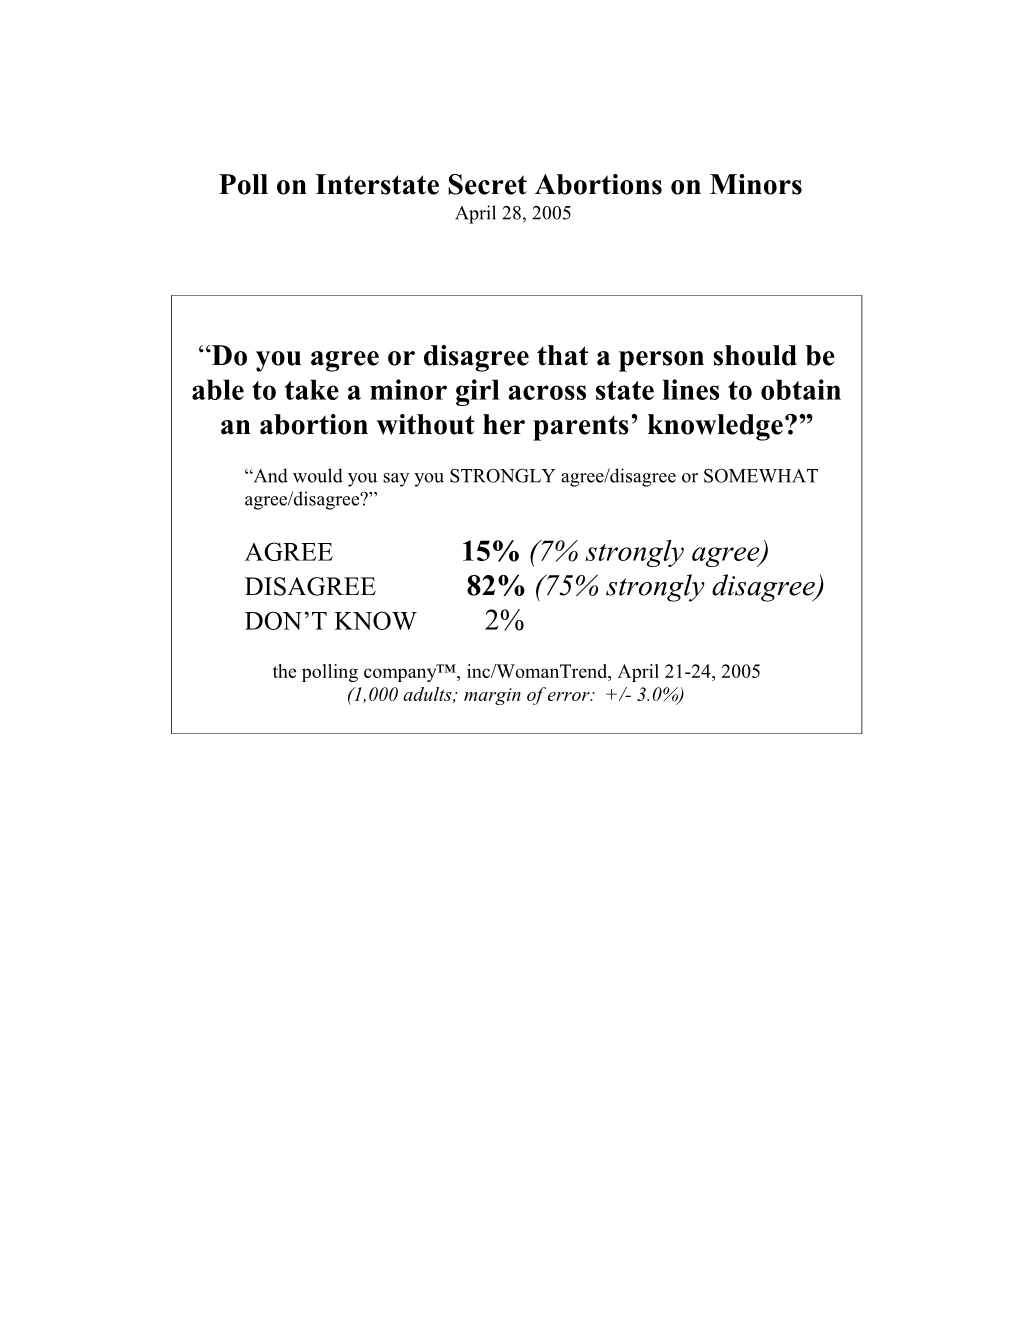 Polls on Requiring Parental Involvement